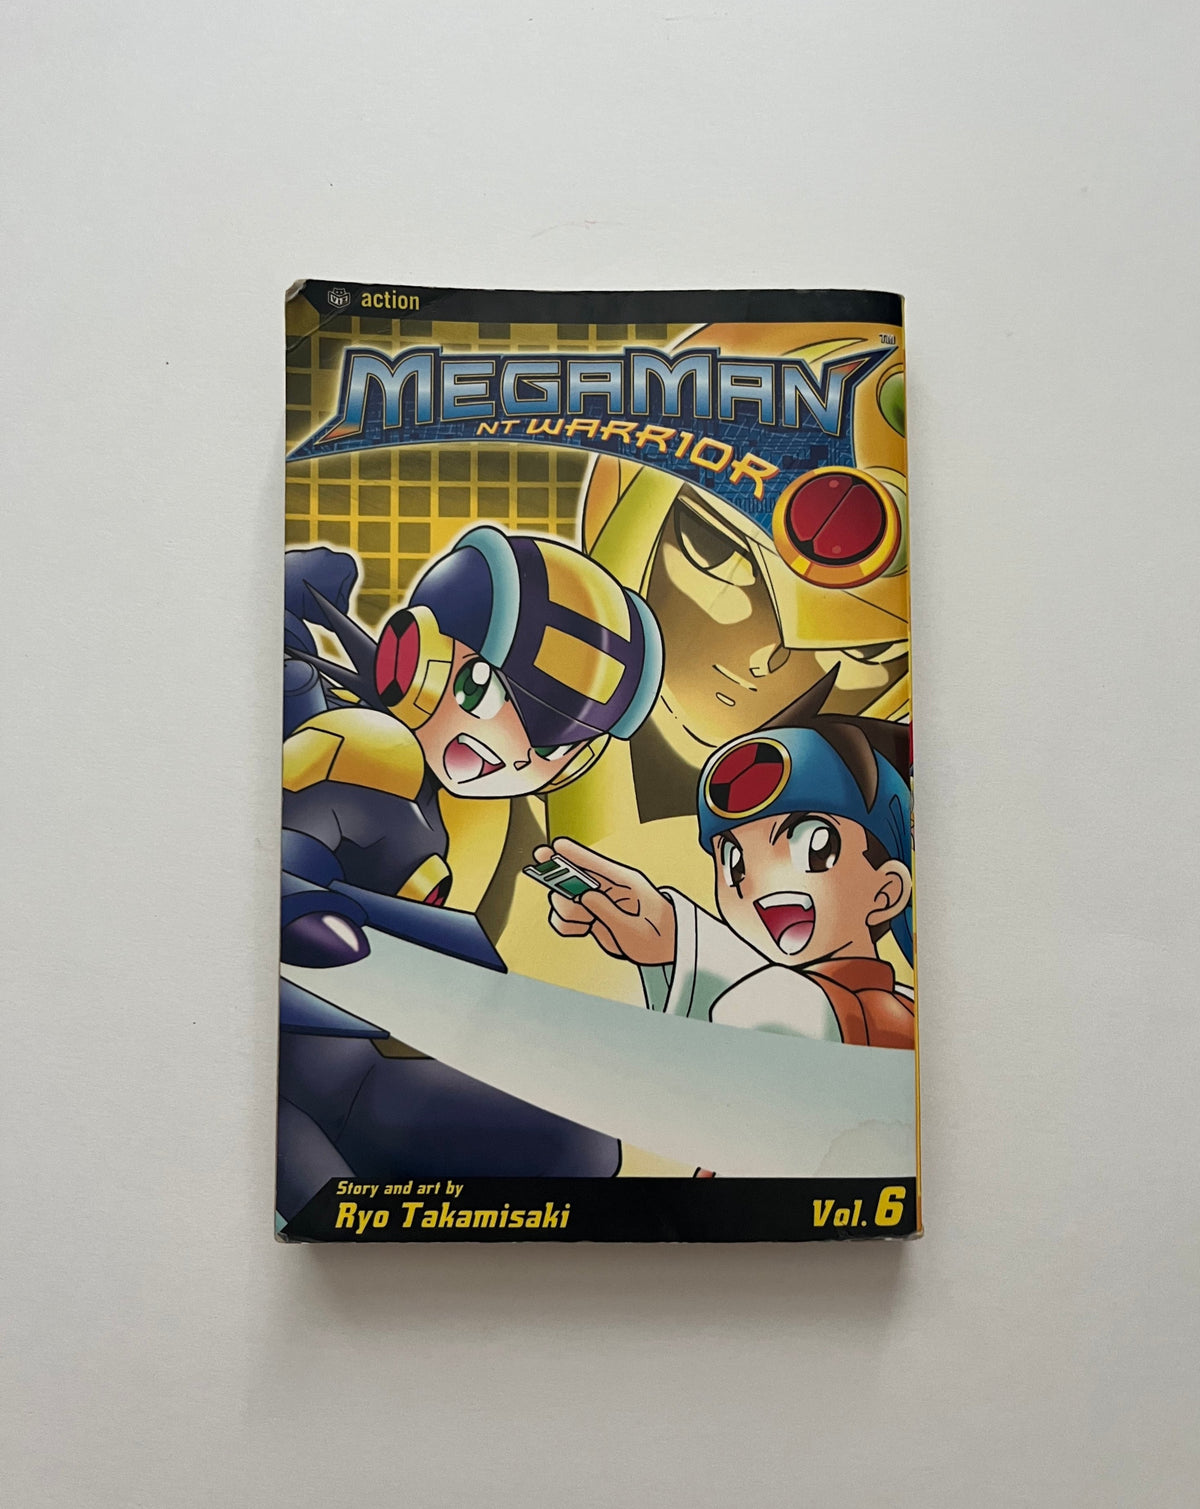 Megaman Nt Warrior volume 6 by Ryo Takamisaki